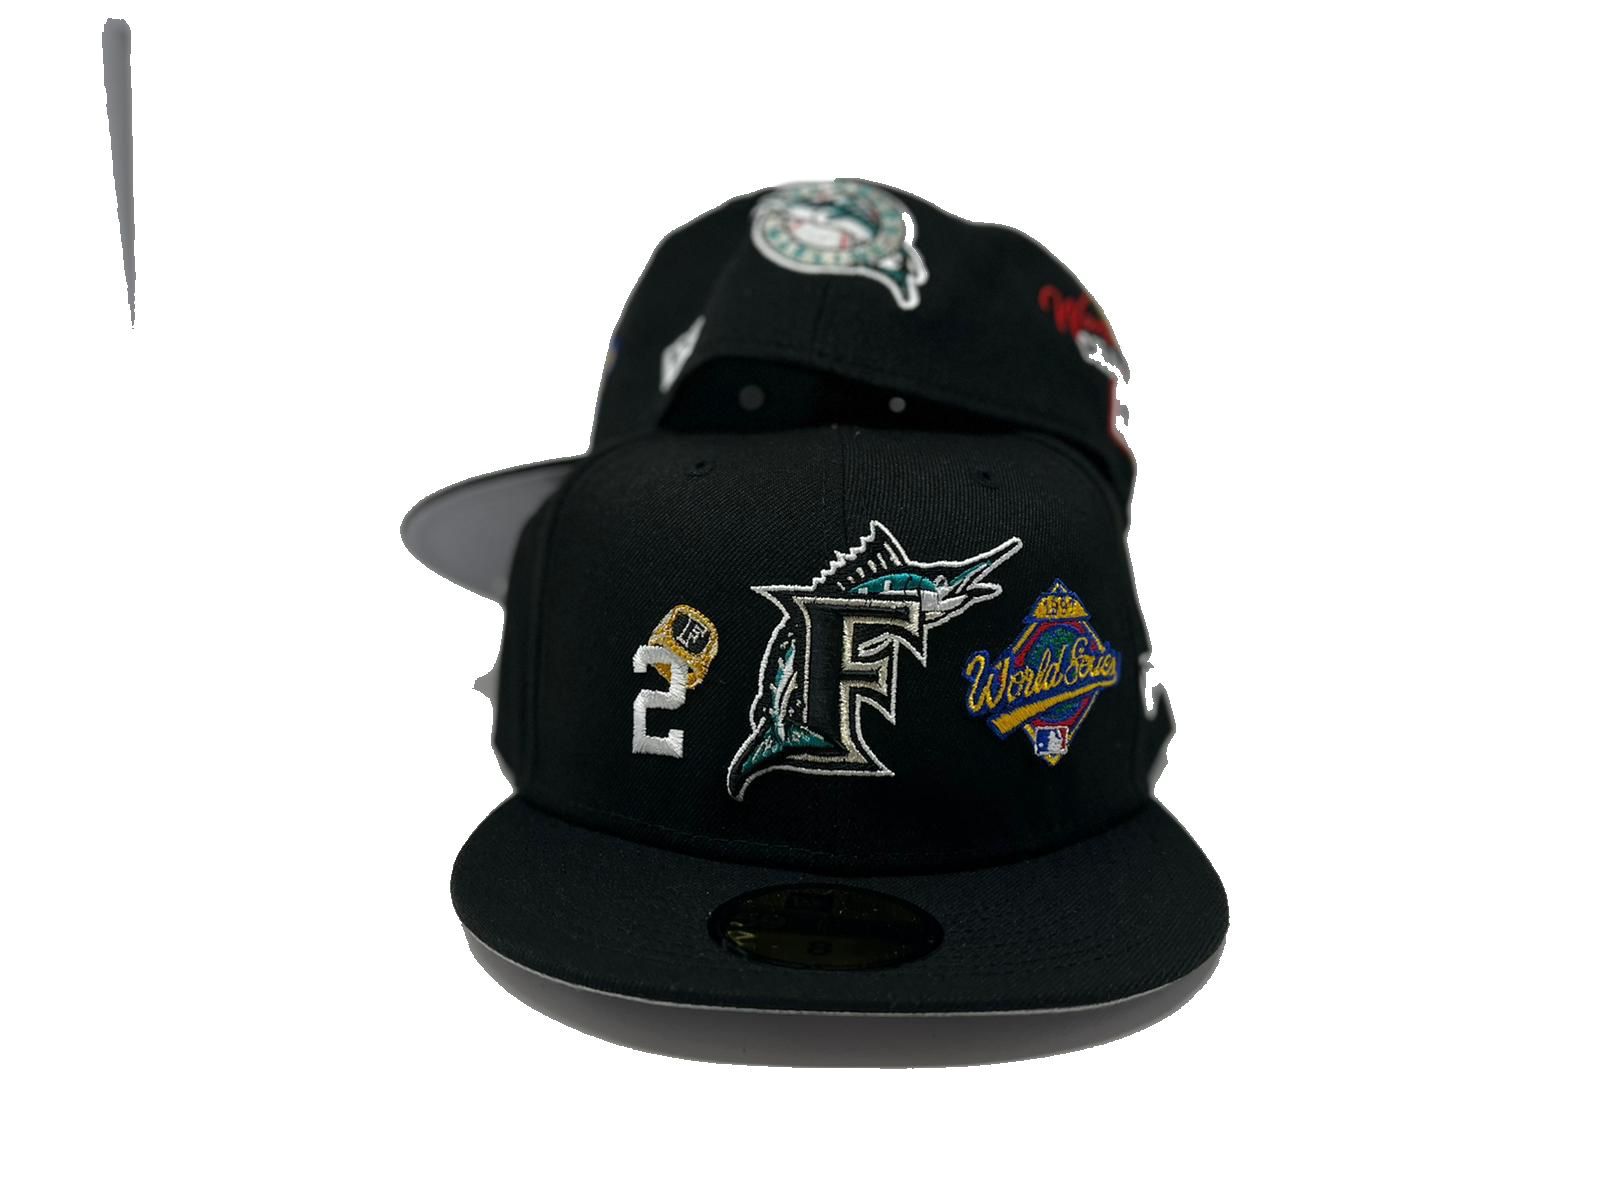 Florida Marlins 2x World Series Champions New Era 59 Fifty Hat